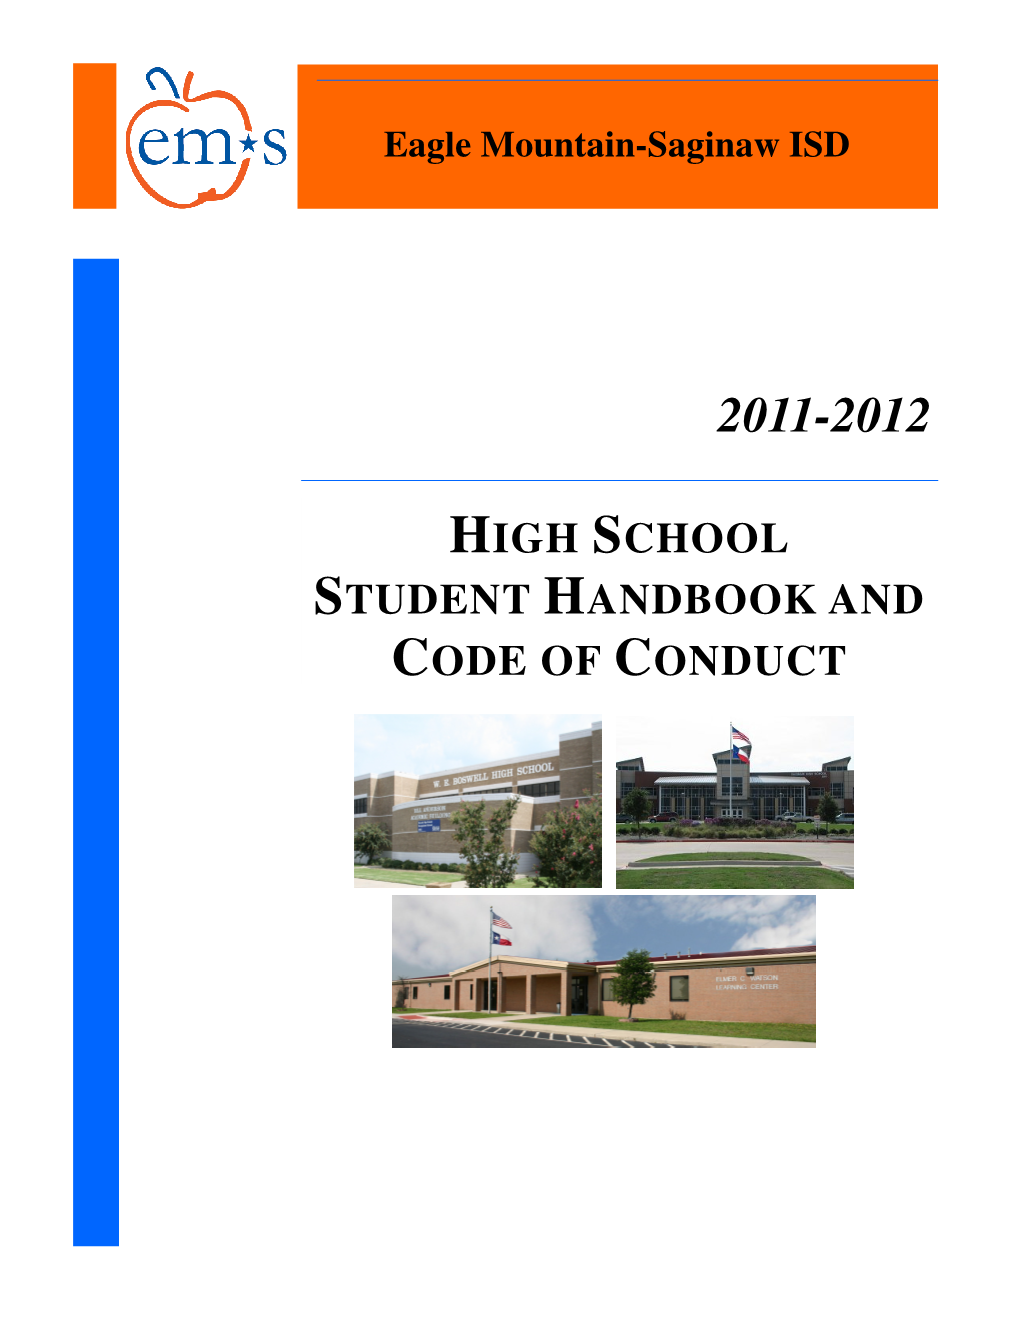 High School Student Handbook and Code of Conduct